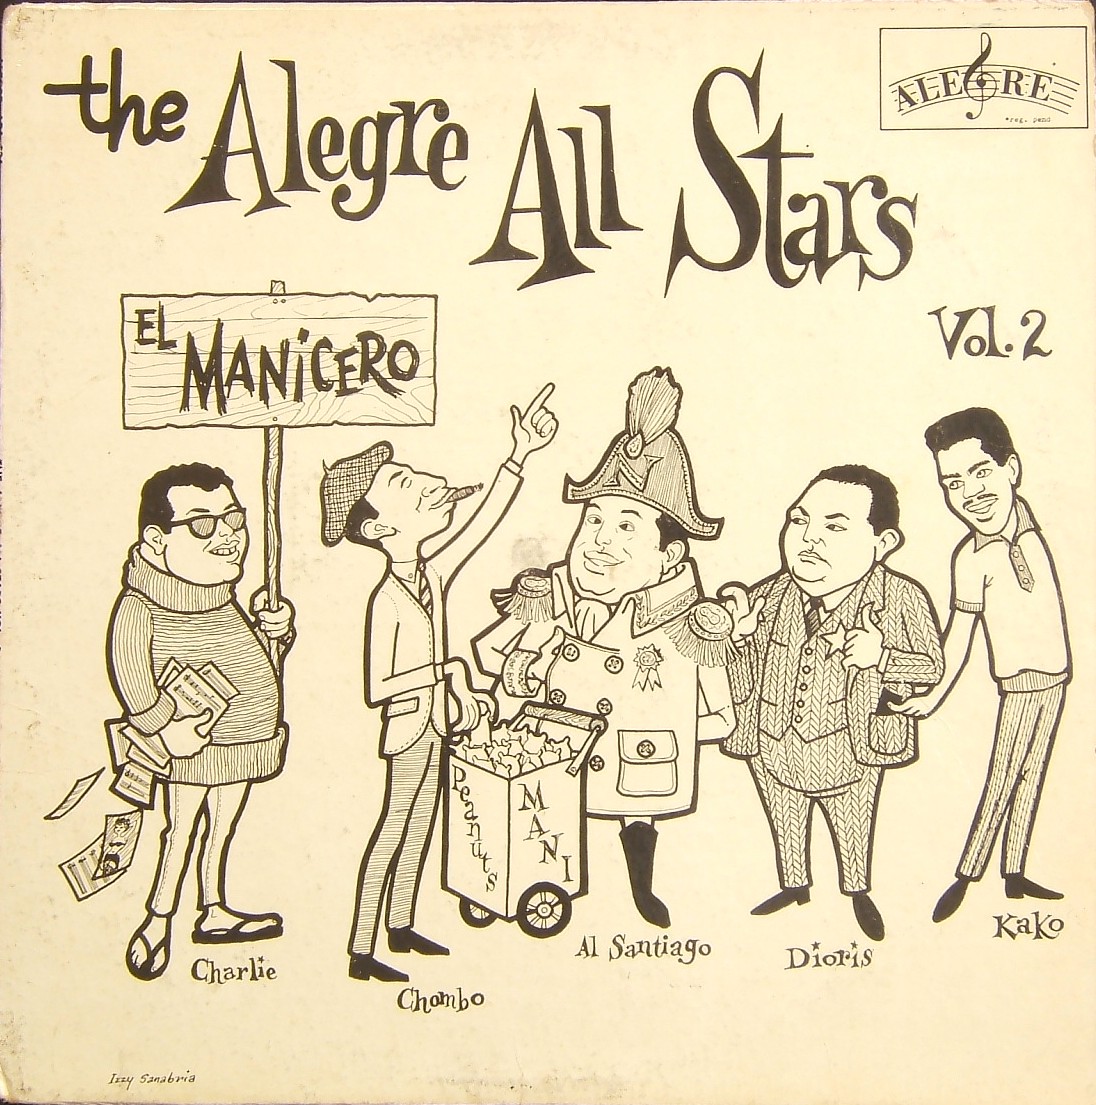 alegre-all-stars-vol-2-front.JPG